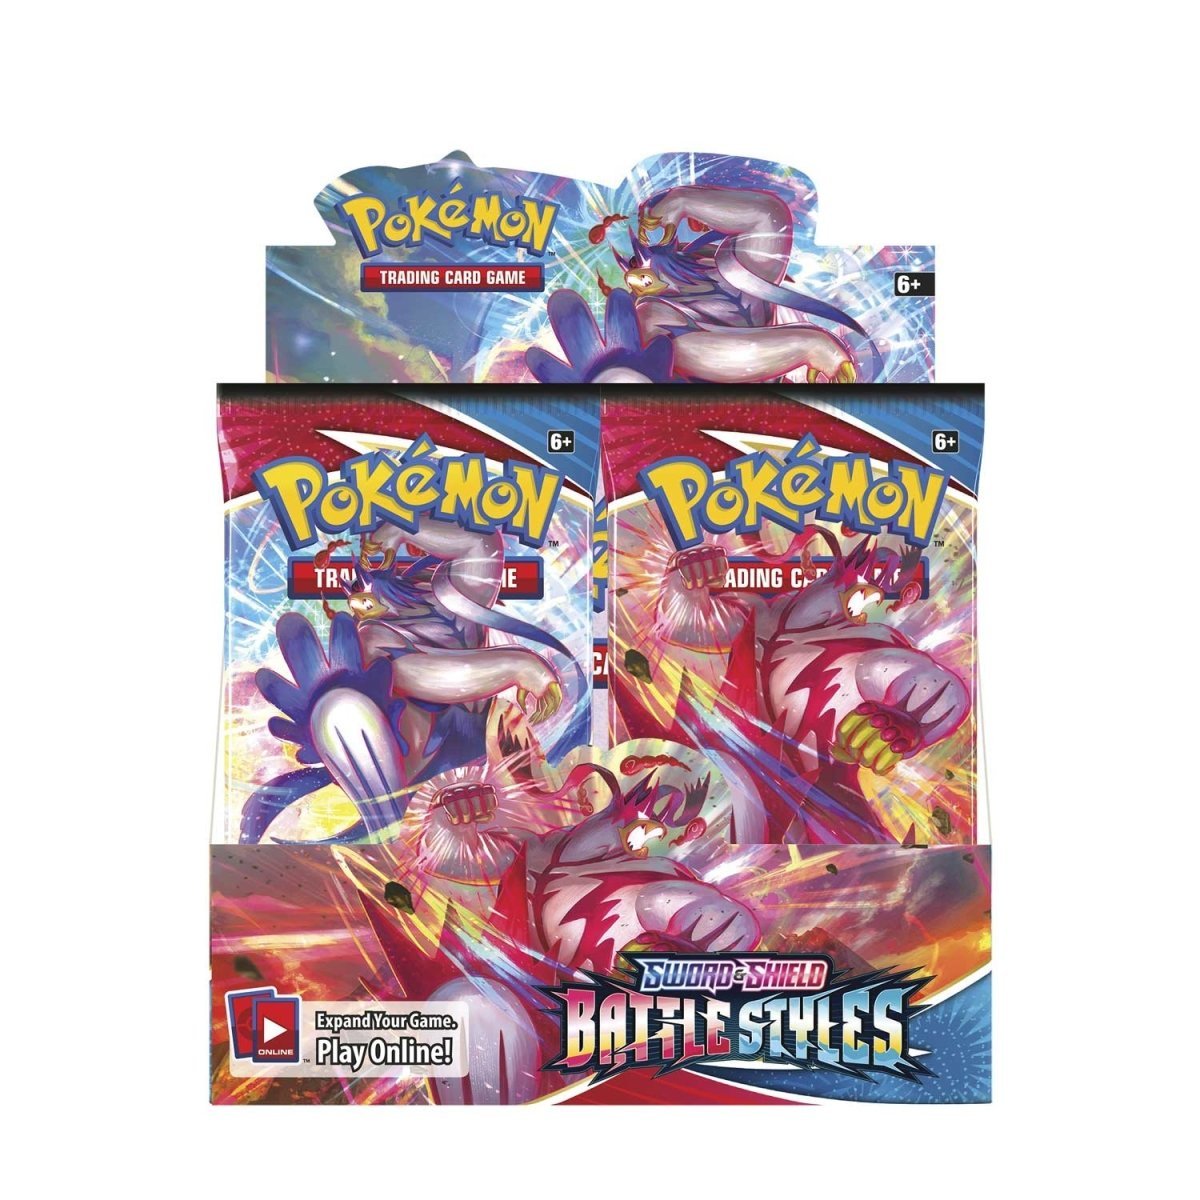 Pokémon TCG: Battle Styles Booster Box - PokeRvmBooster Box